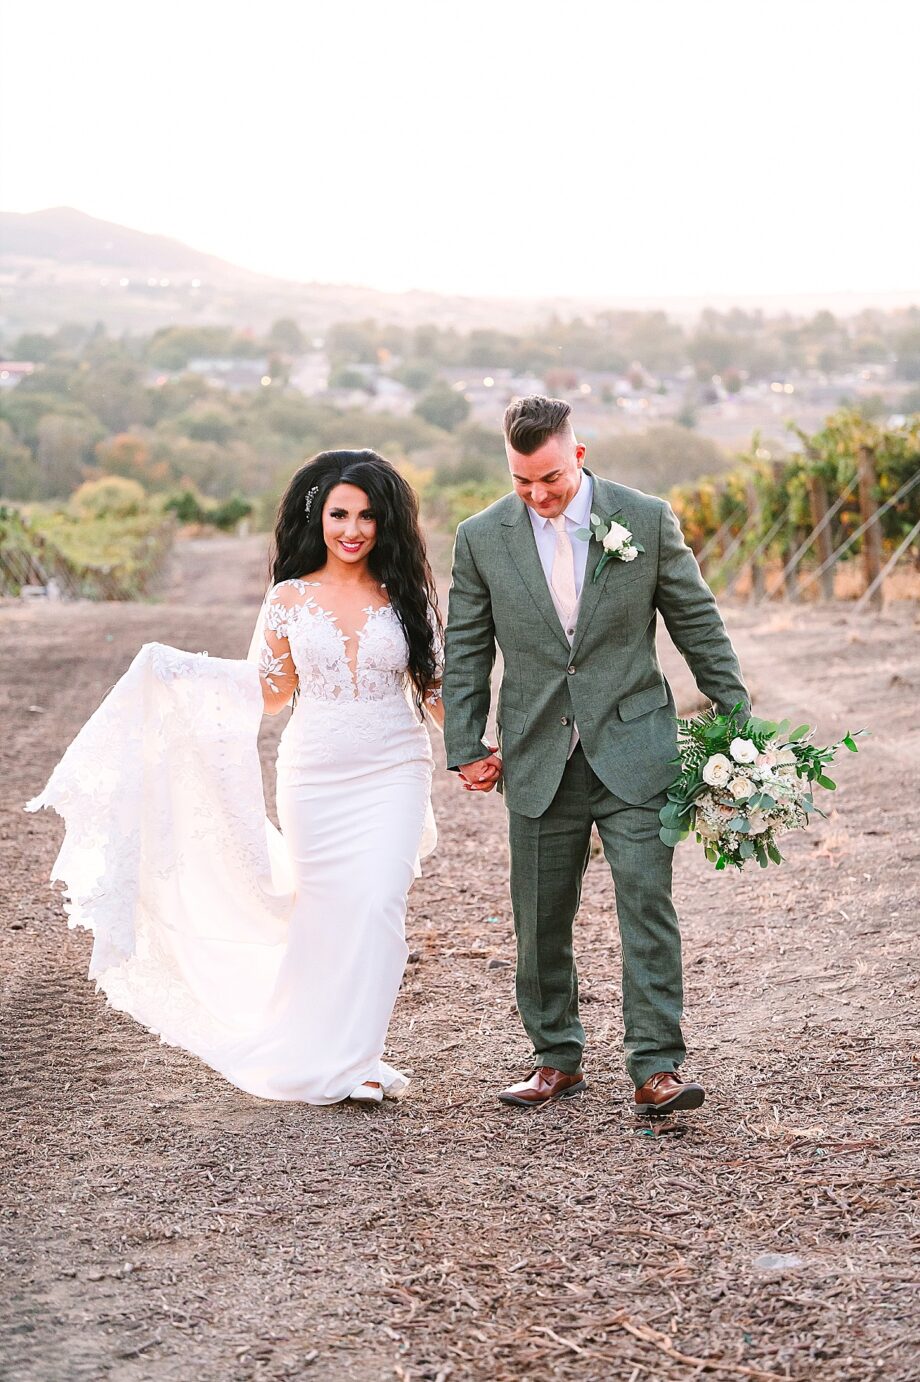 Terra Blanca Winery Wedding Nathan and Ashley bride and groom in vineyard